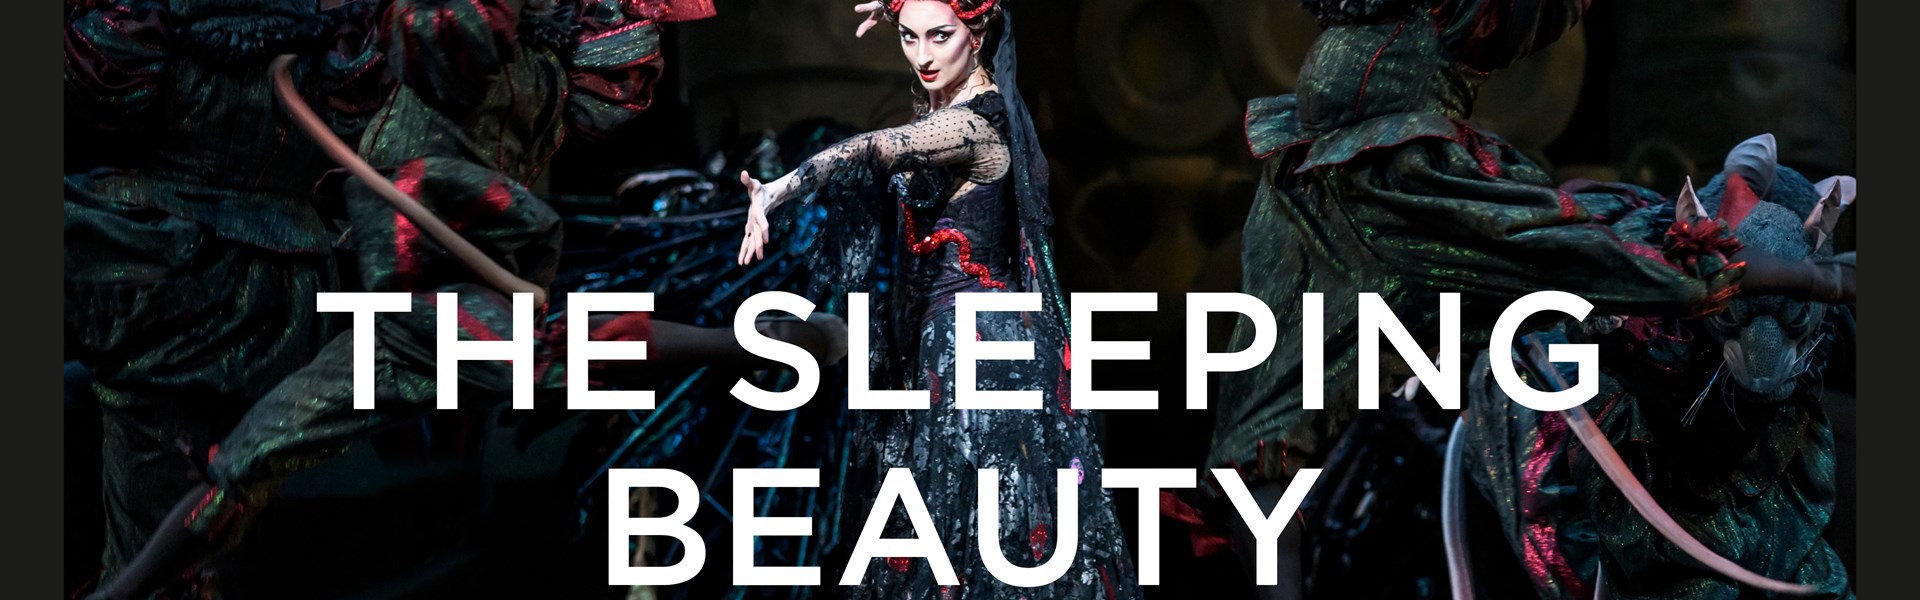 Royal Ballet: The Sleeping Beauty (Live Recording)